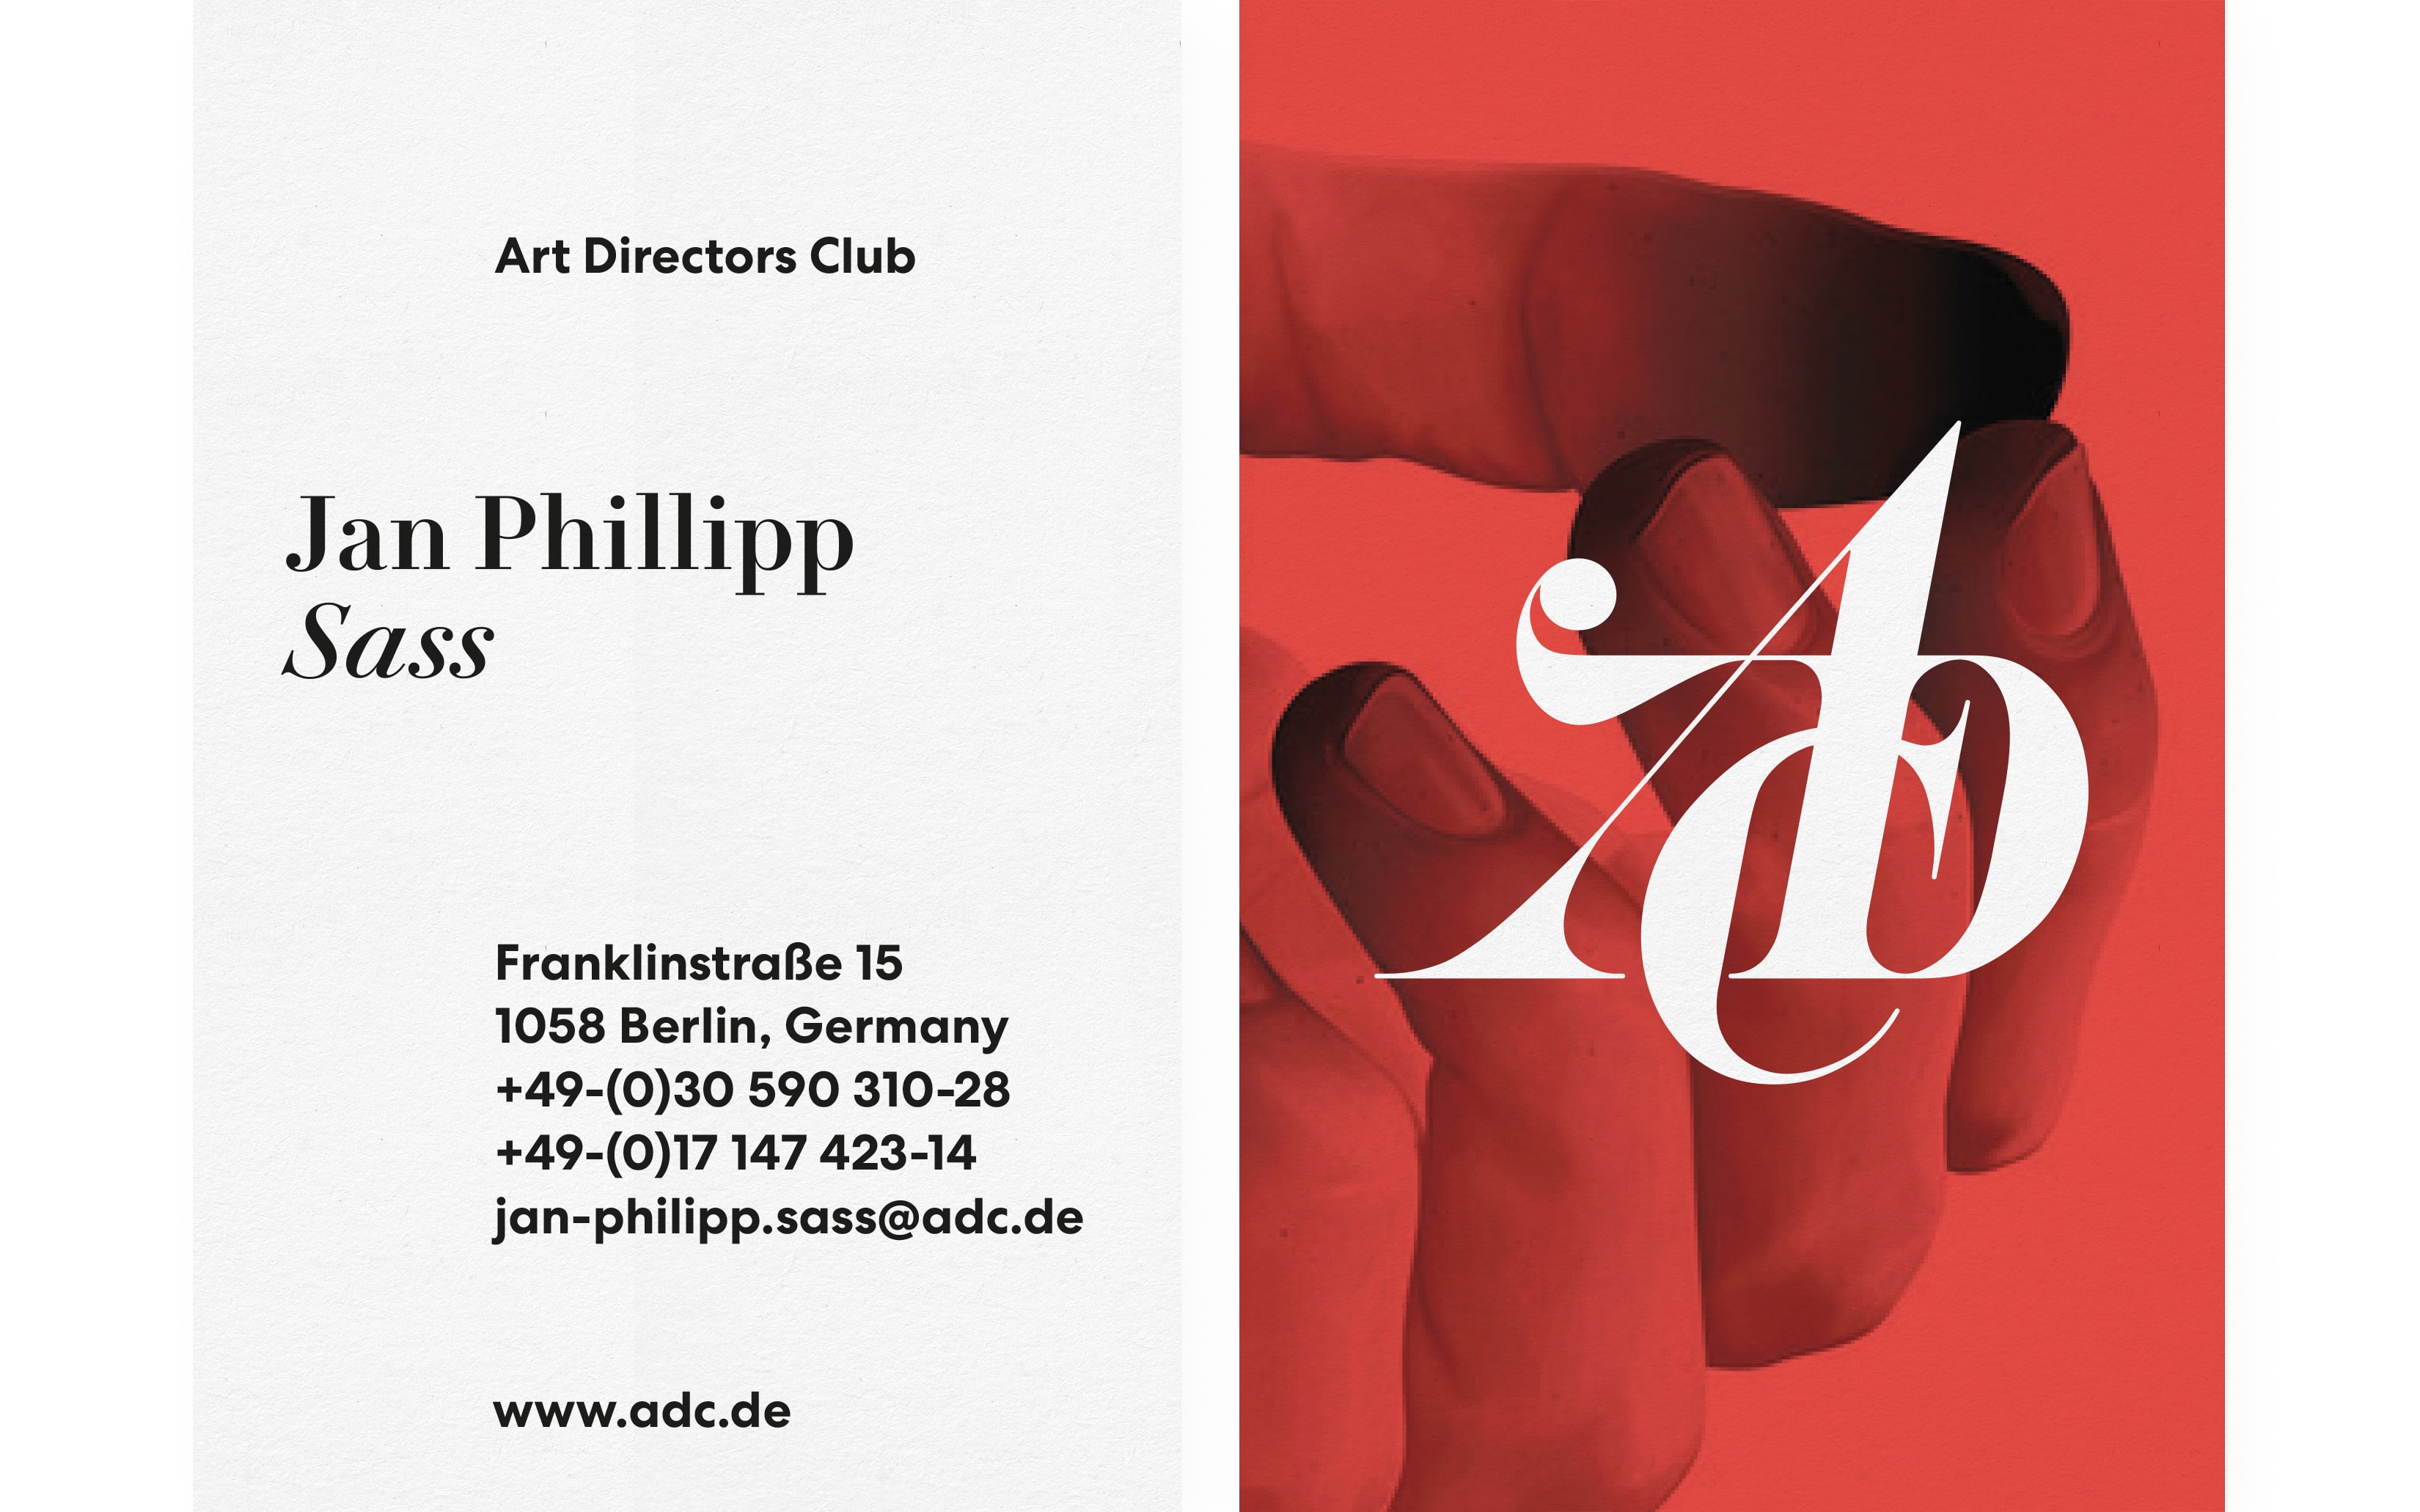 Bureau Johannes Erler – Art Directors Club